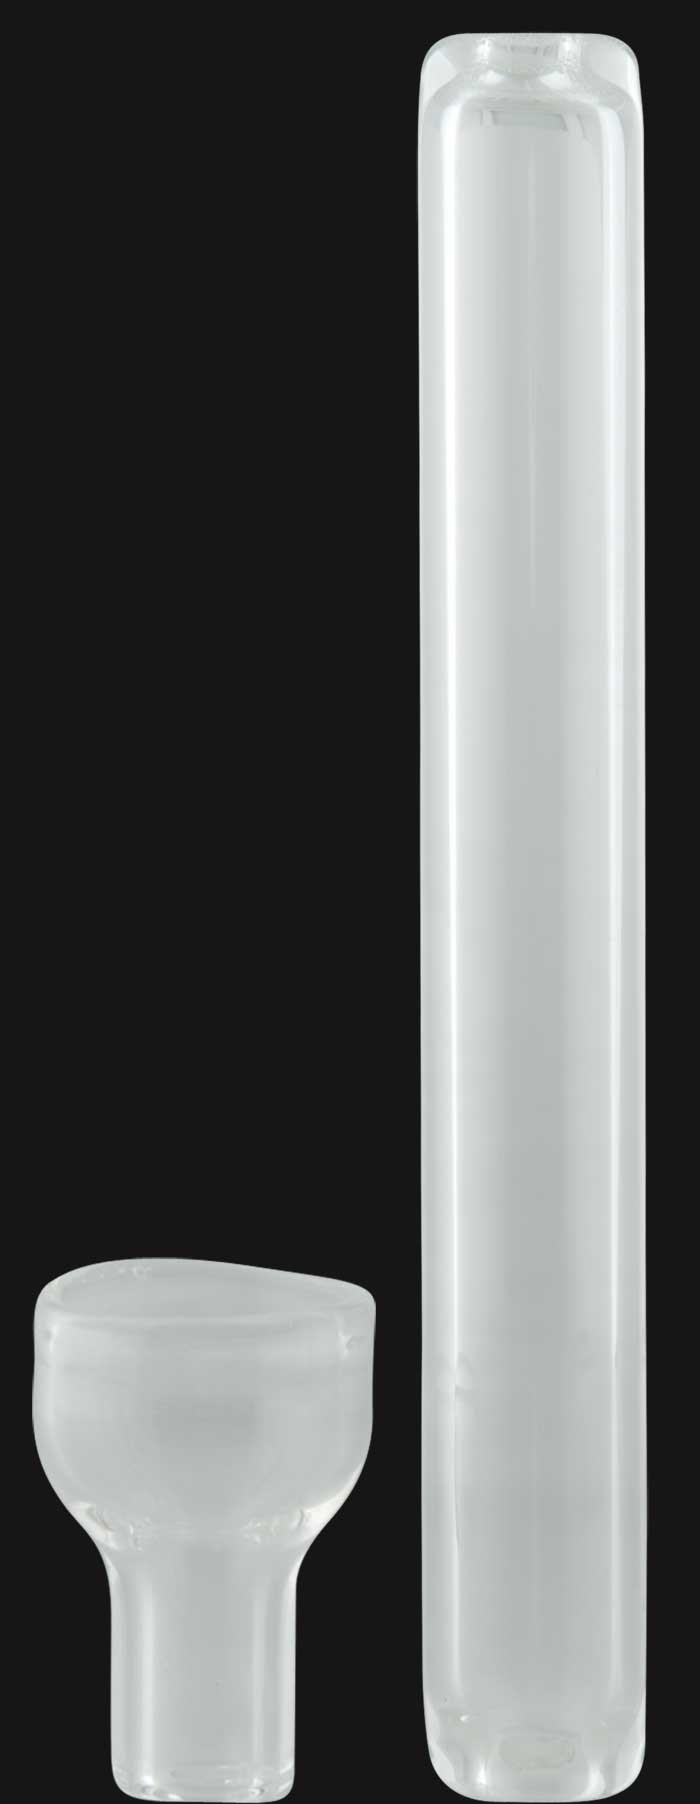 PYPTEK - Prometheus Titan Pipe - Glass Replacement Kit